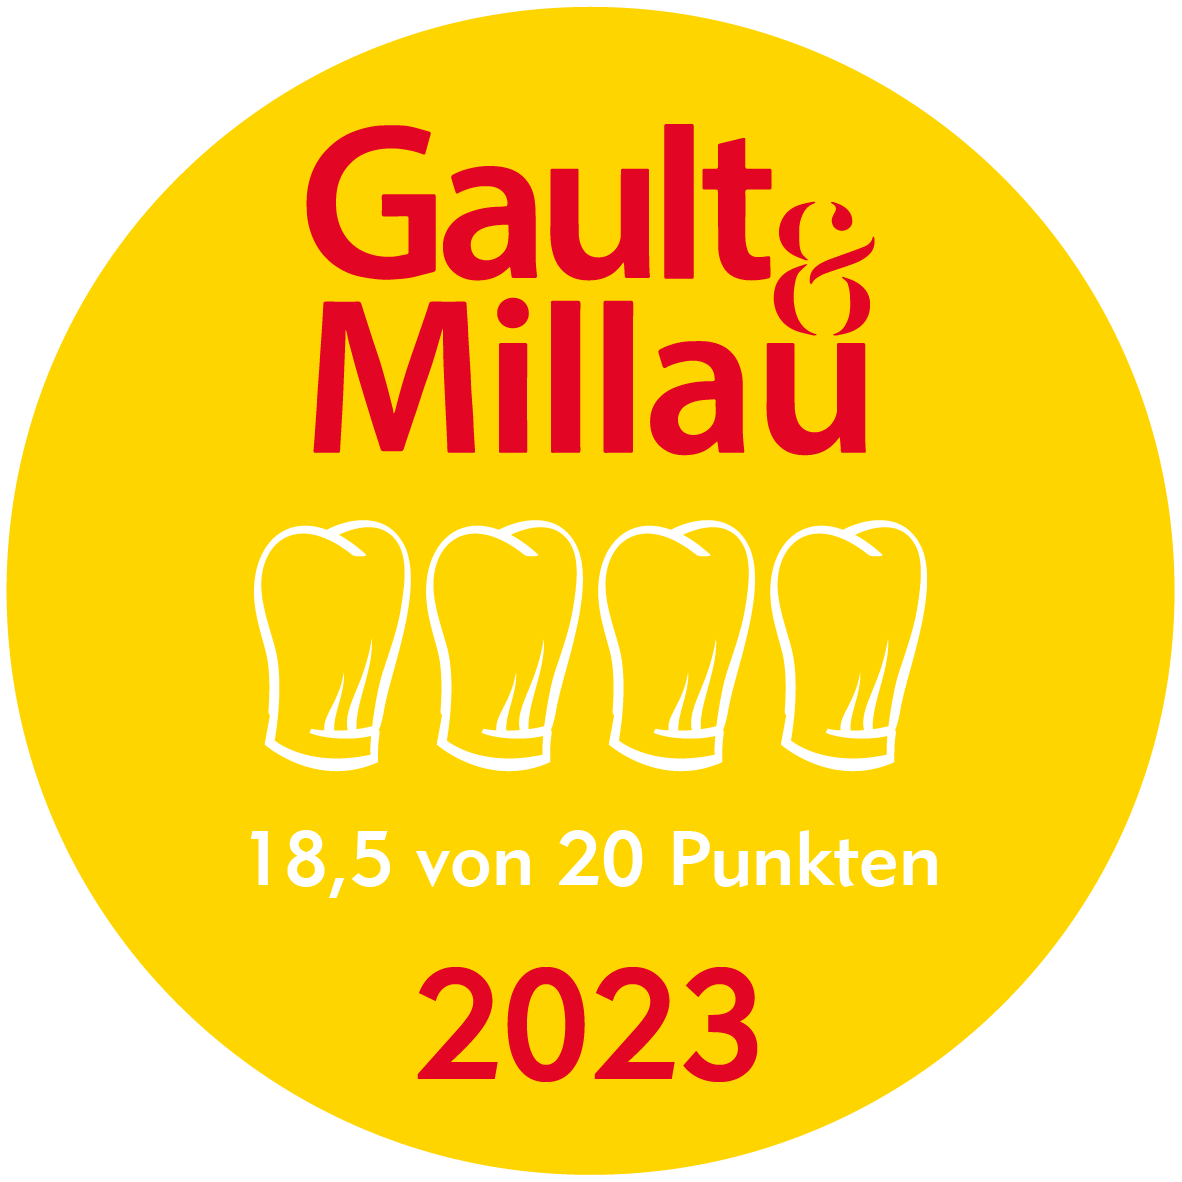 Guide Gault Millau 2023